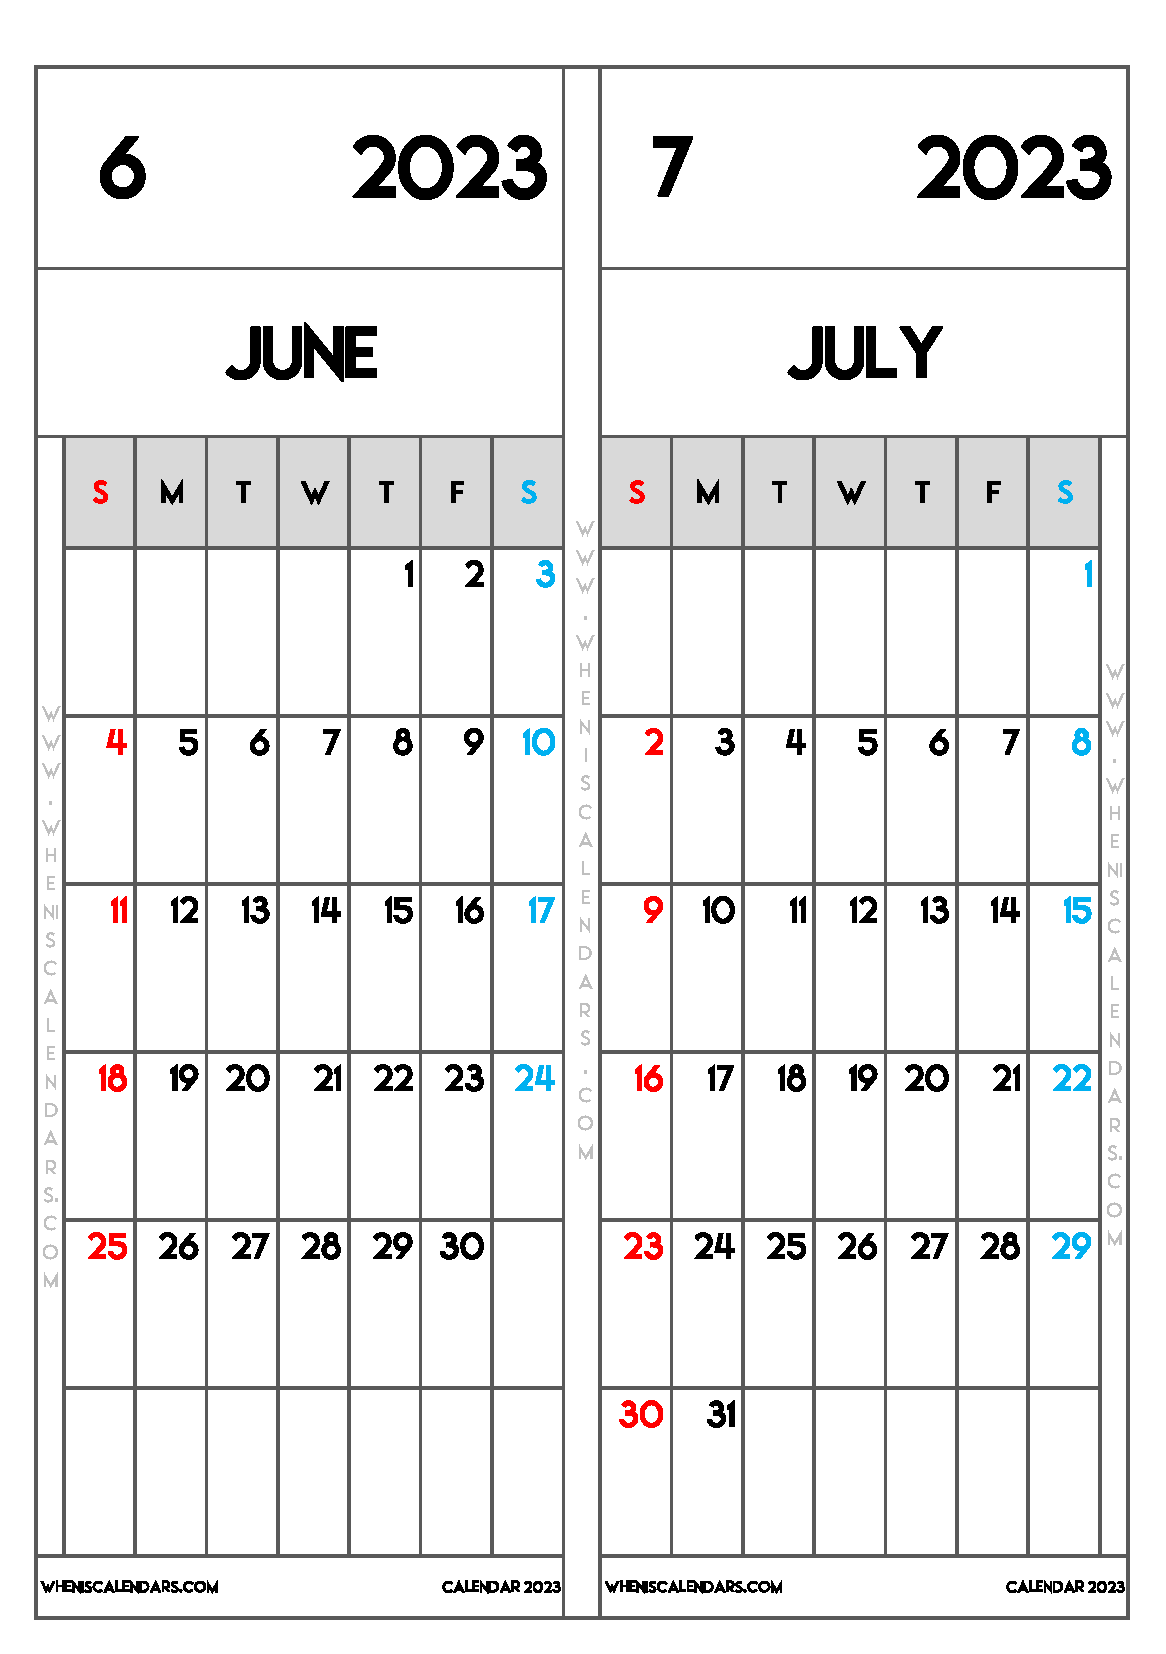 Download Free Printable June July 2023 Calendar as PDF and PNG Image